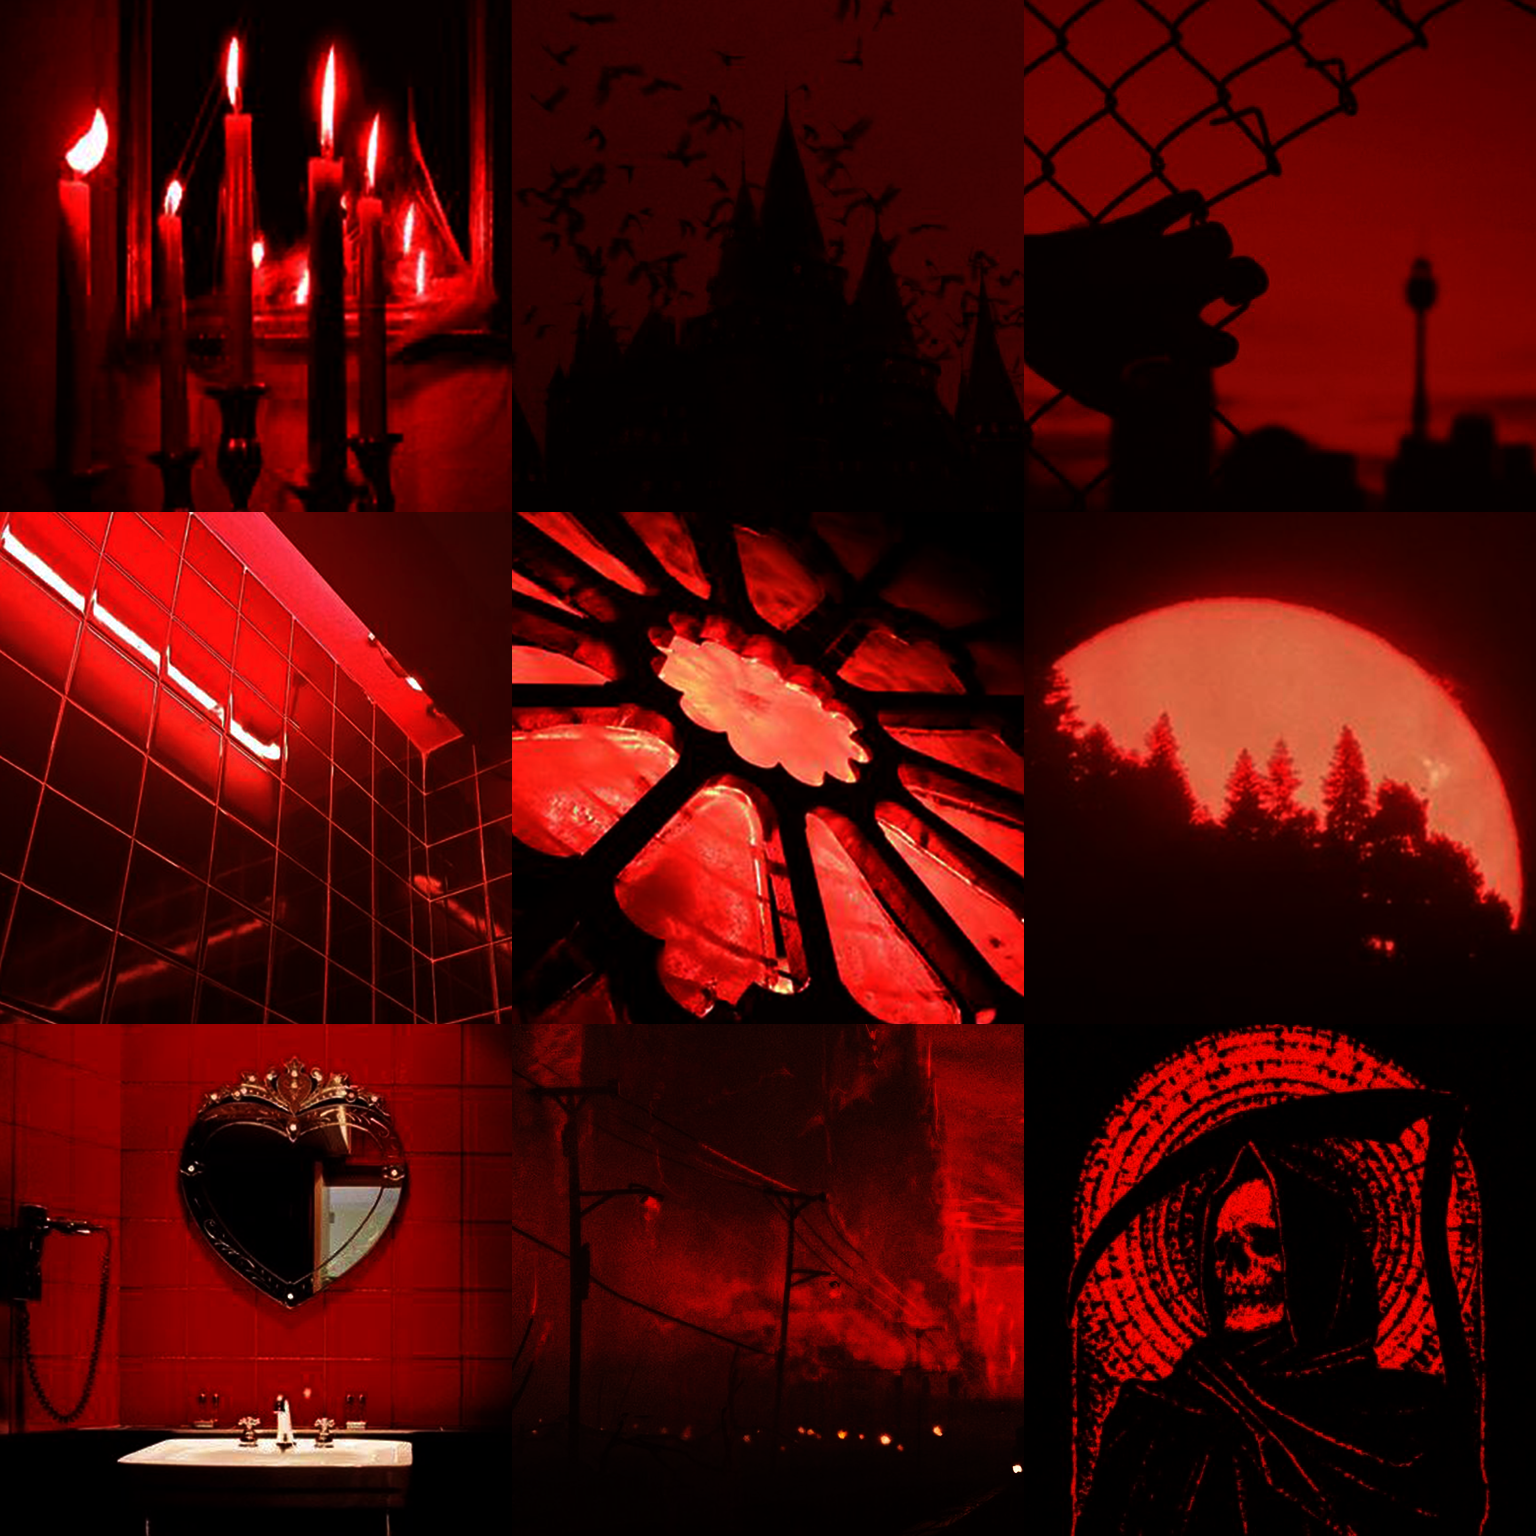 f2u Evil red black aesthetic moodboard by LAMB-5 on DeviantArt